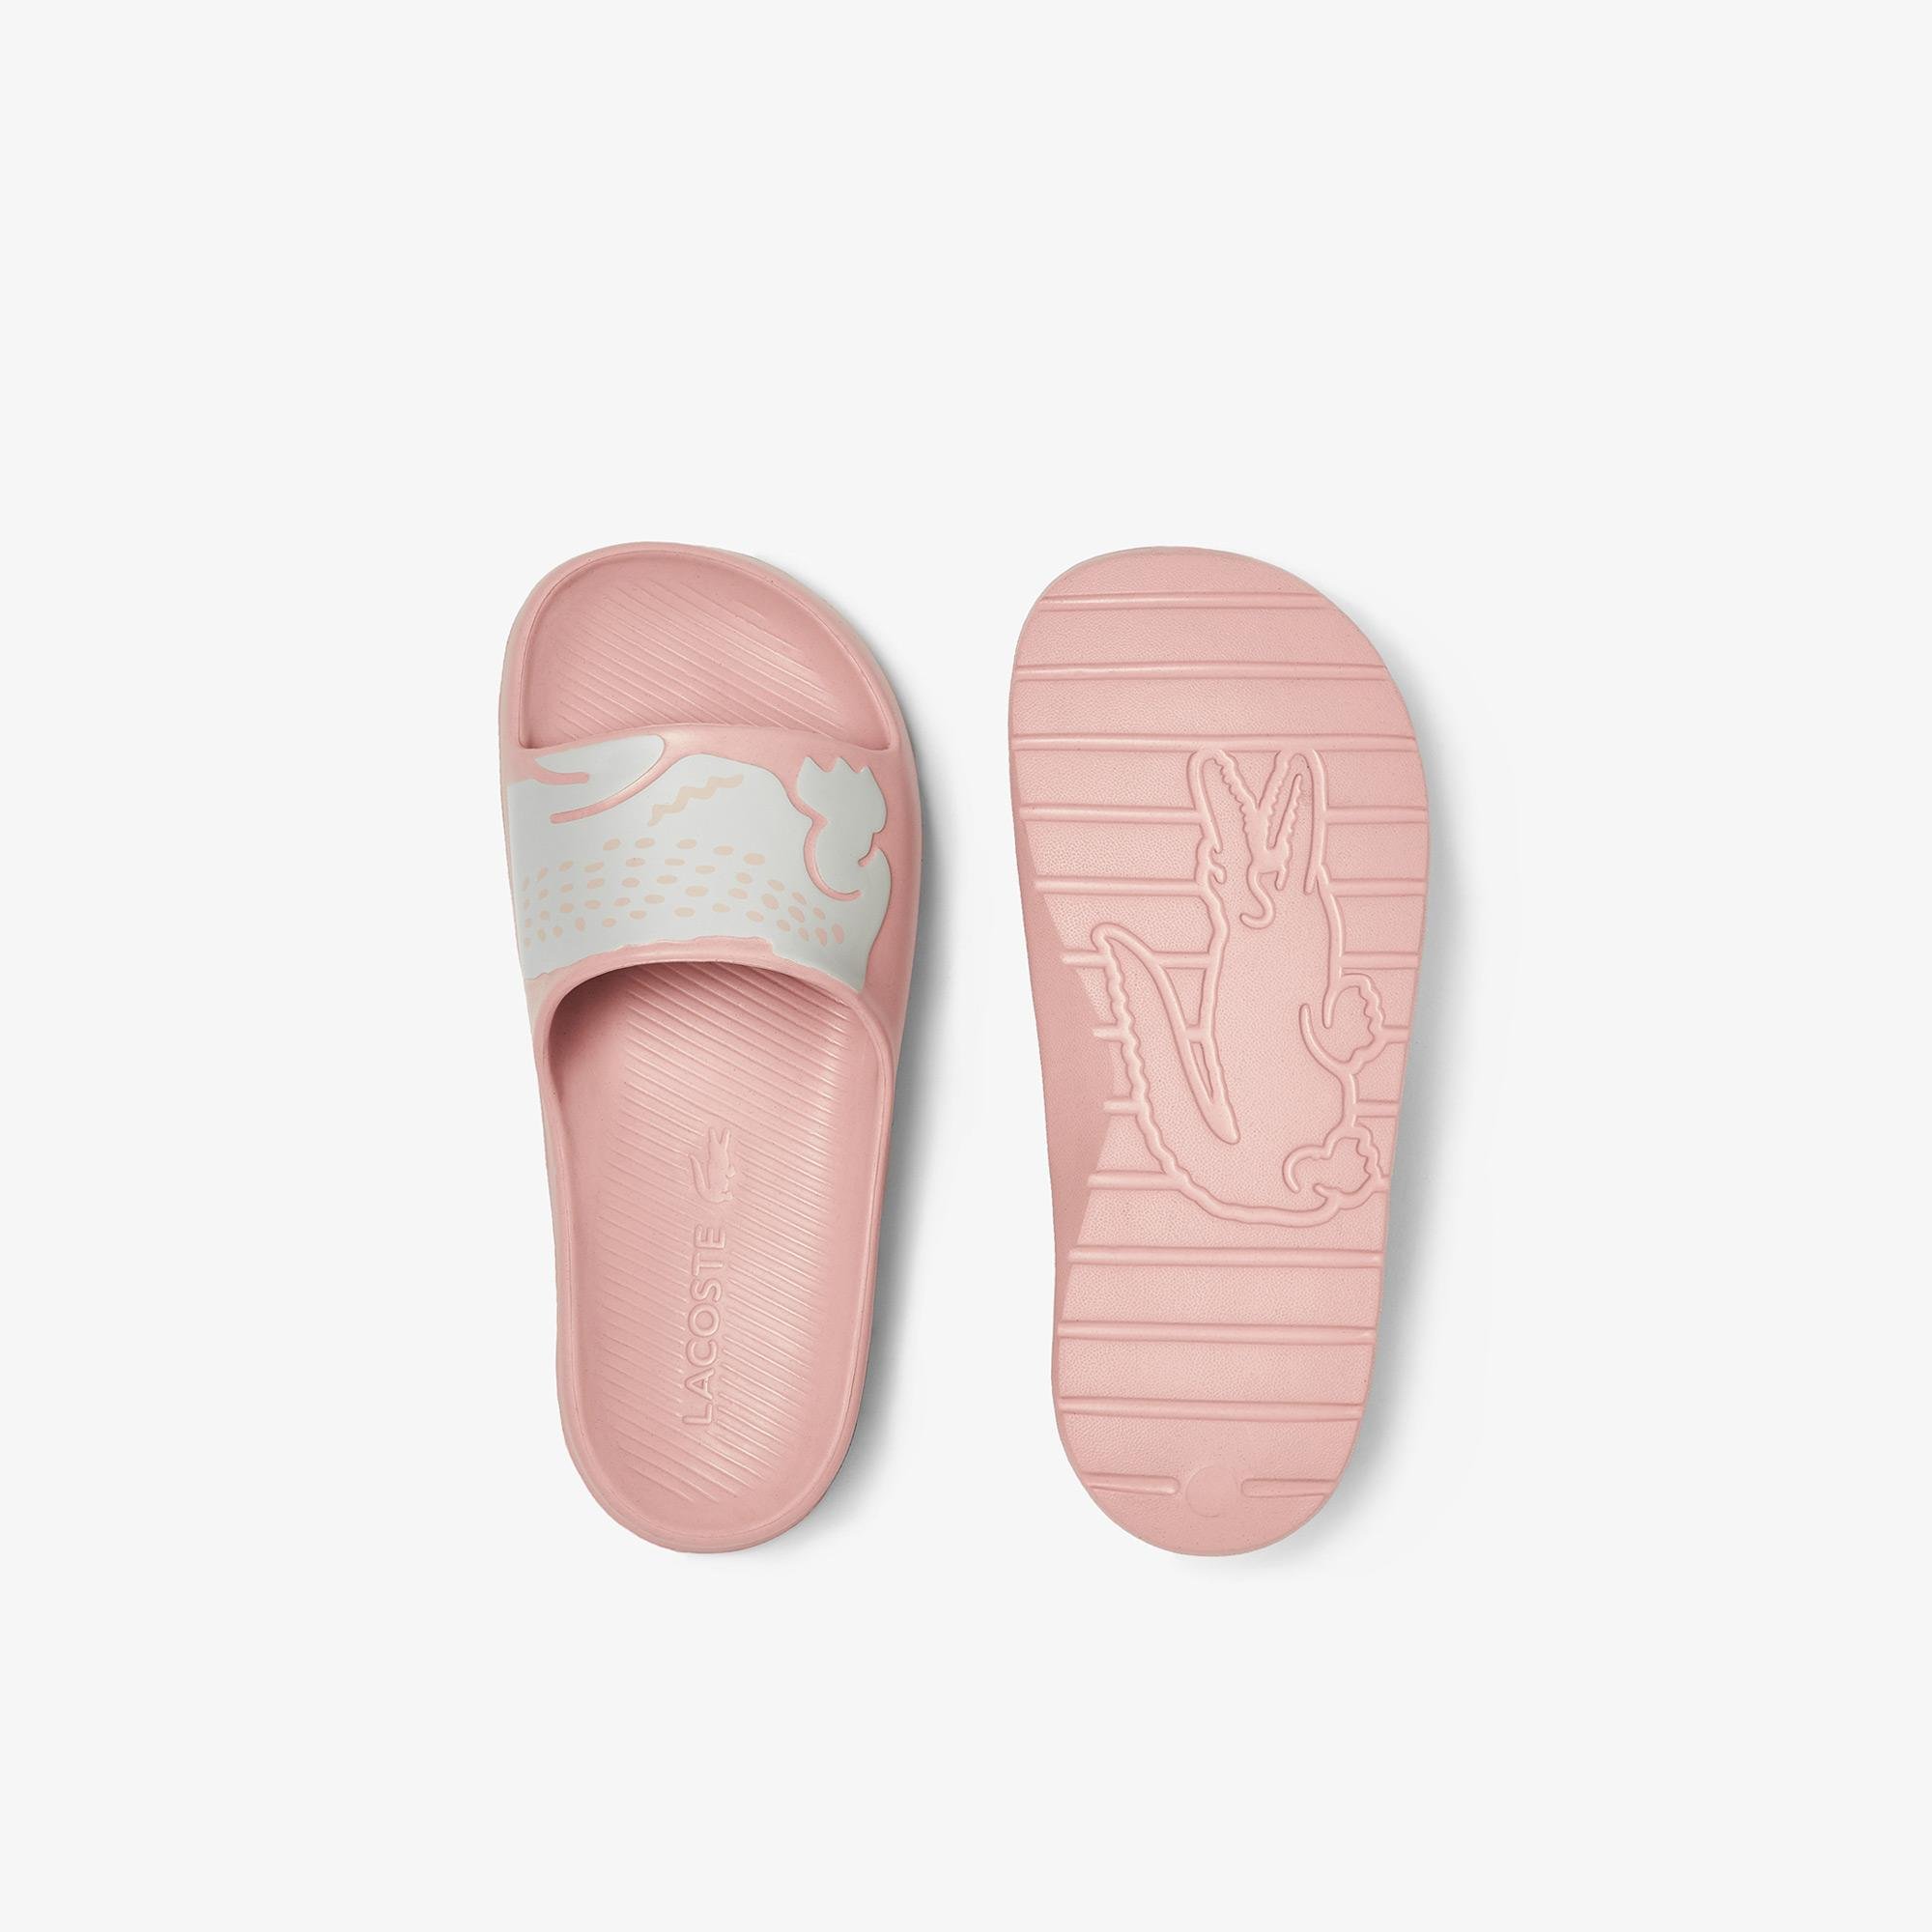 Lacoste Női Croco 2.0 szintetikus lenyomatú papucs